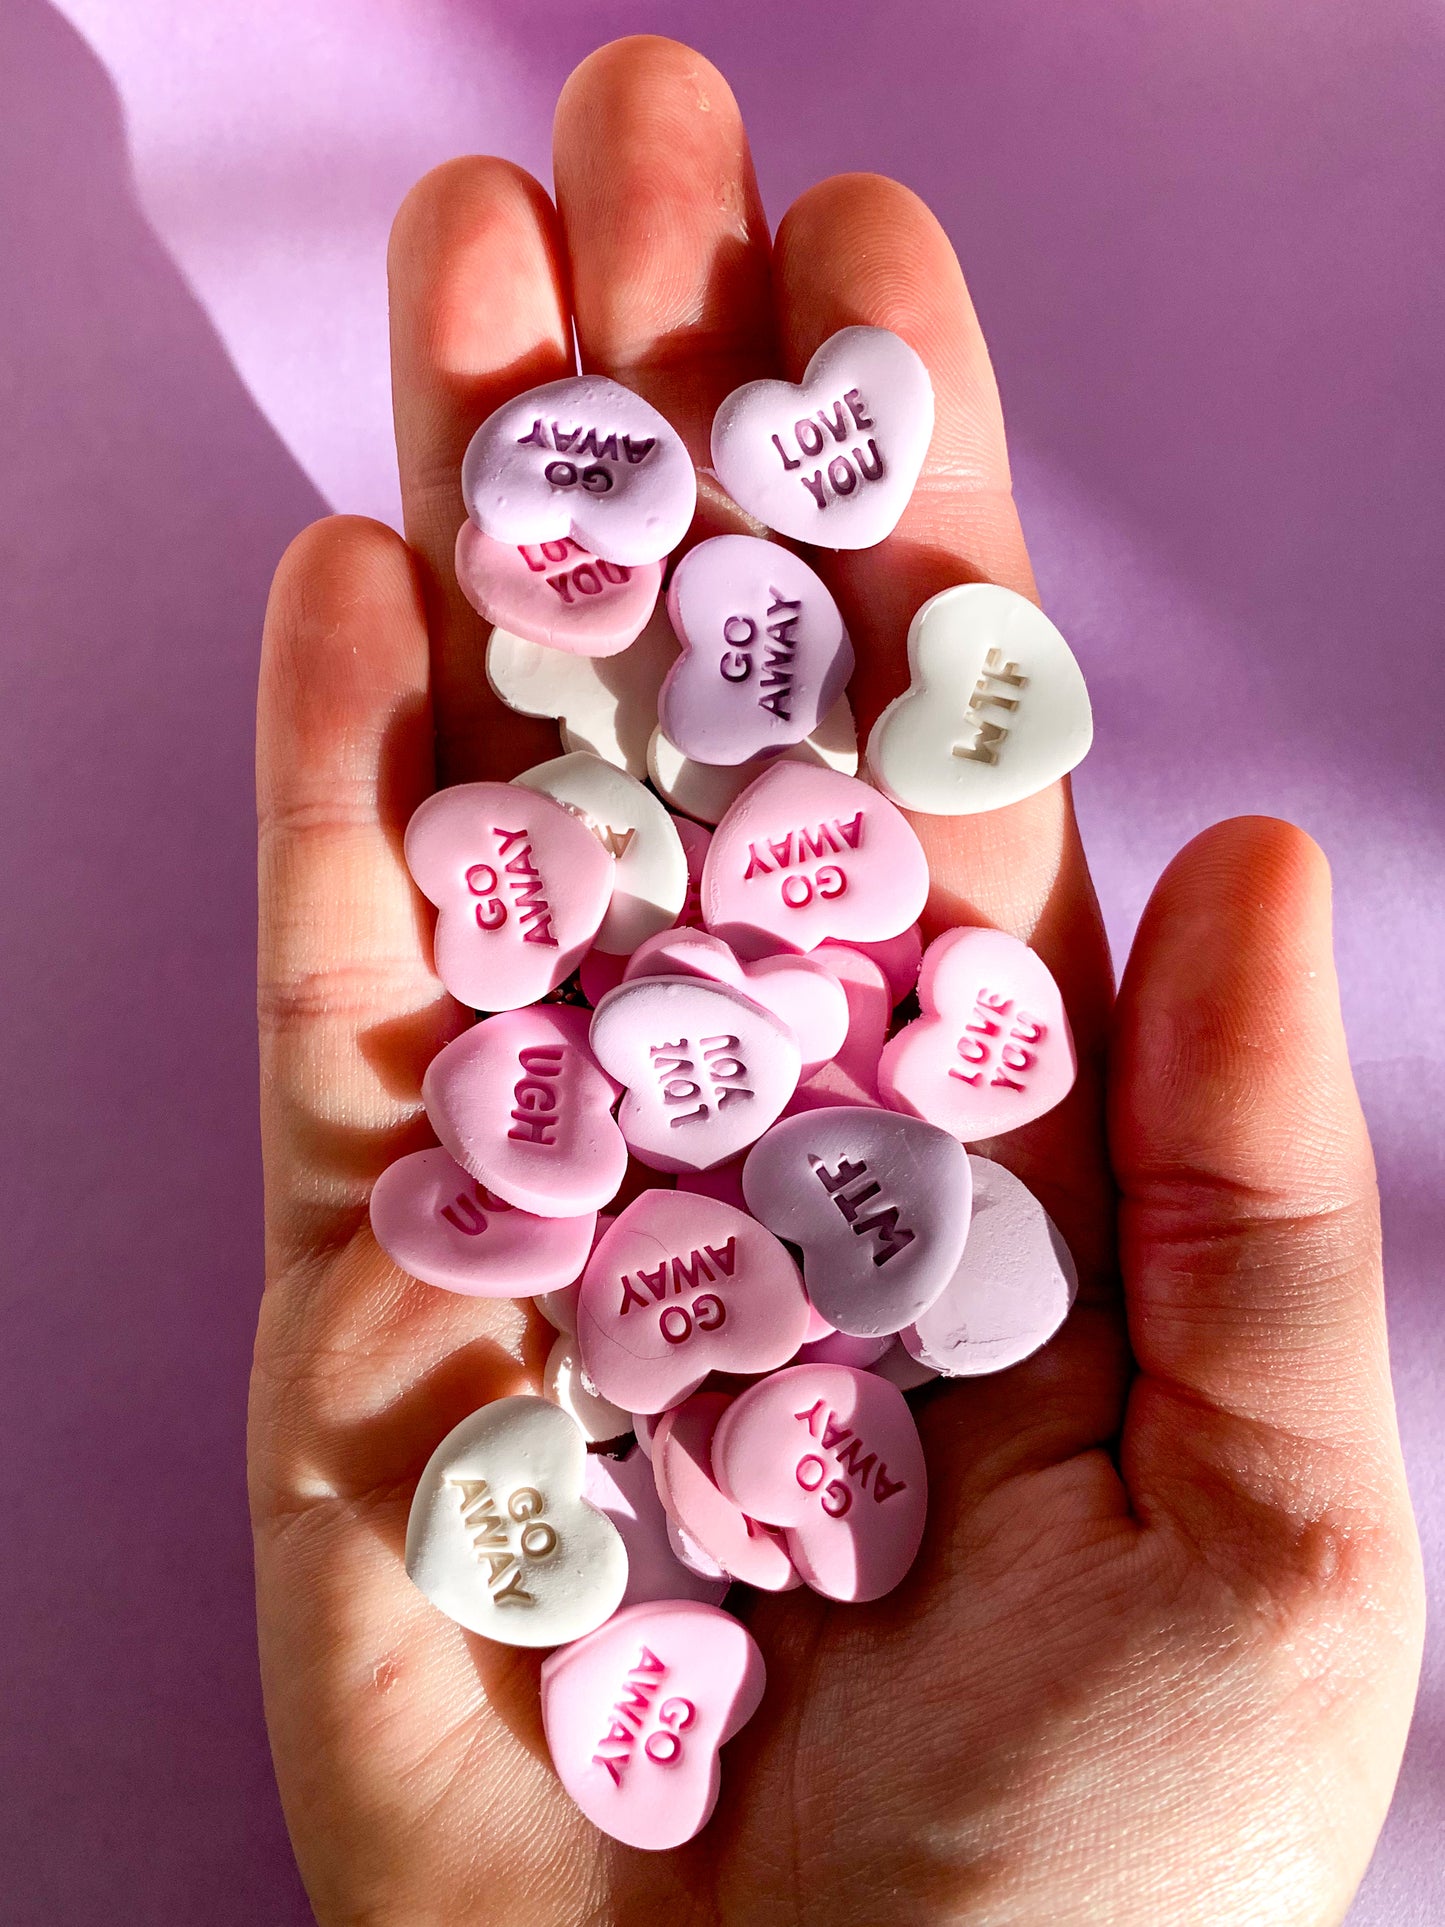 Candy "WTF" Hearts